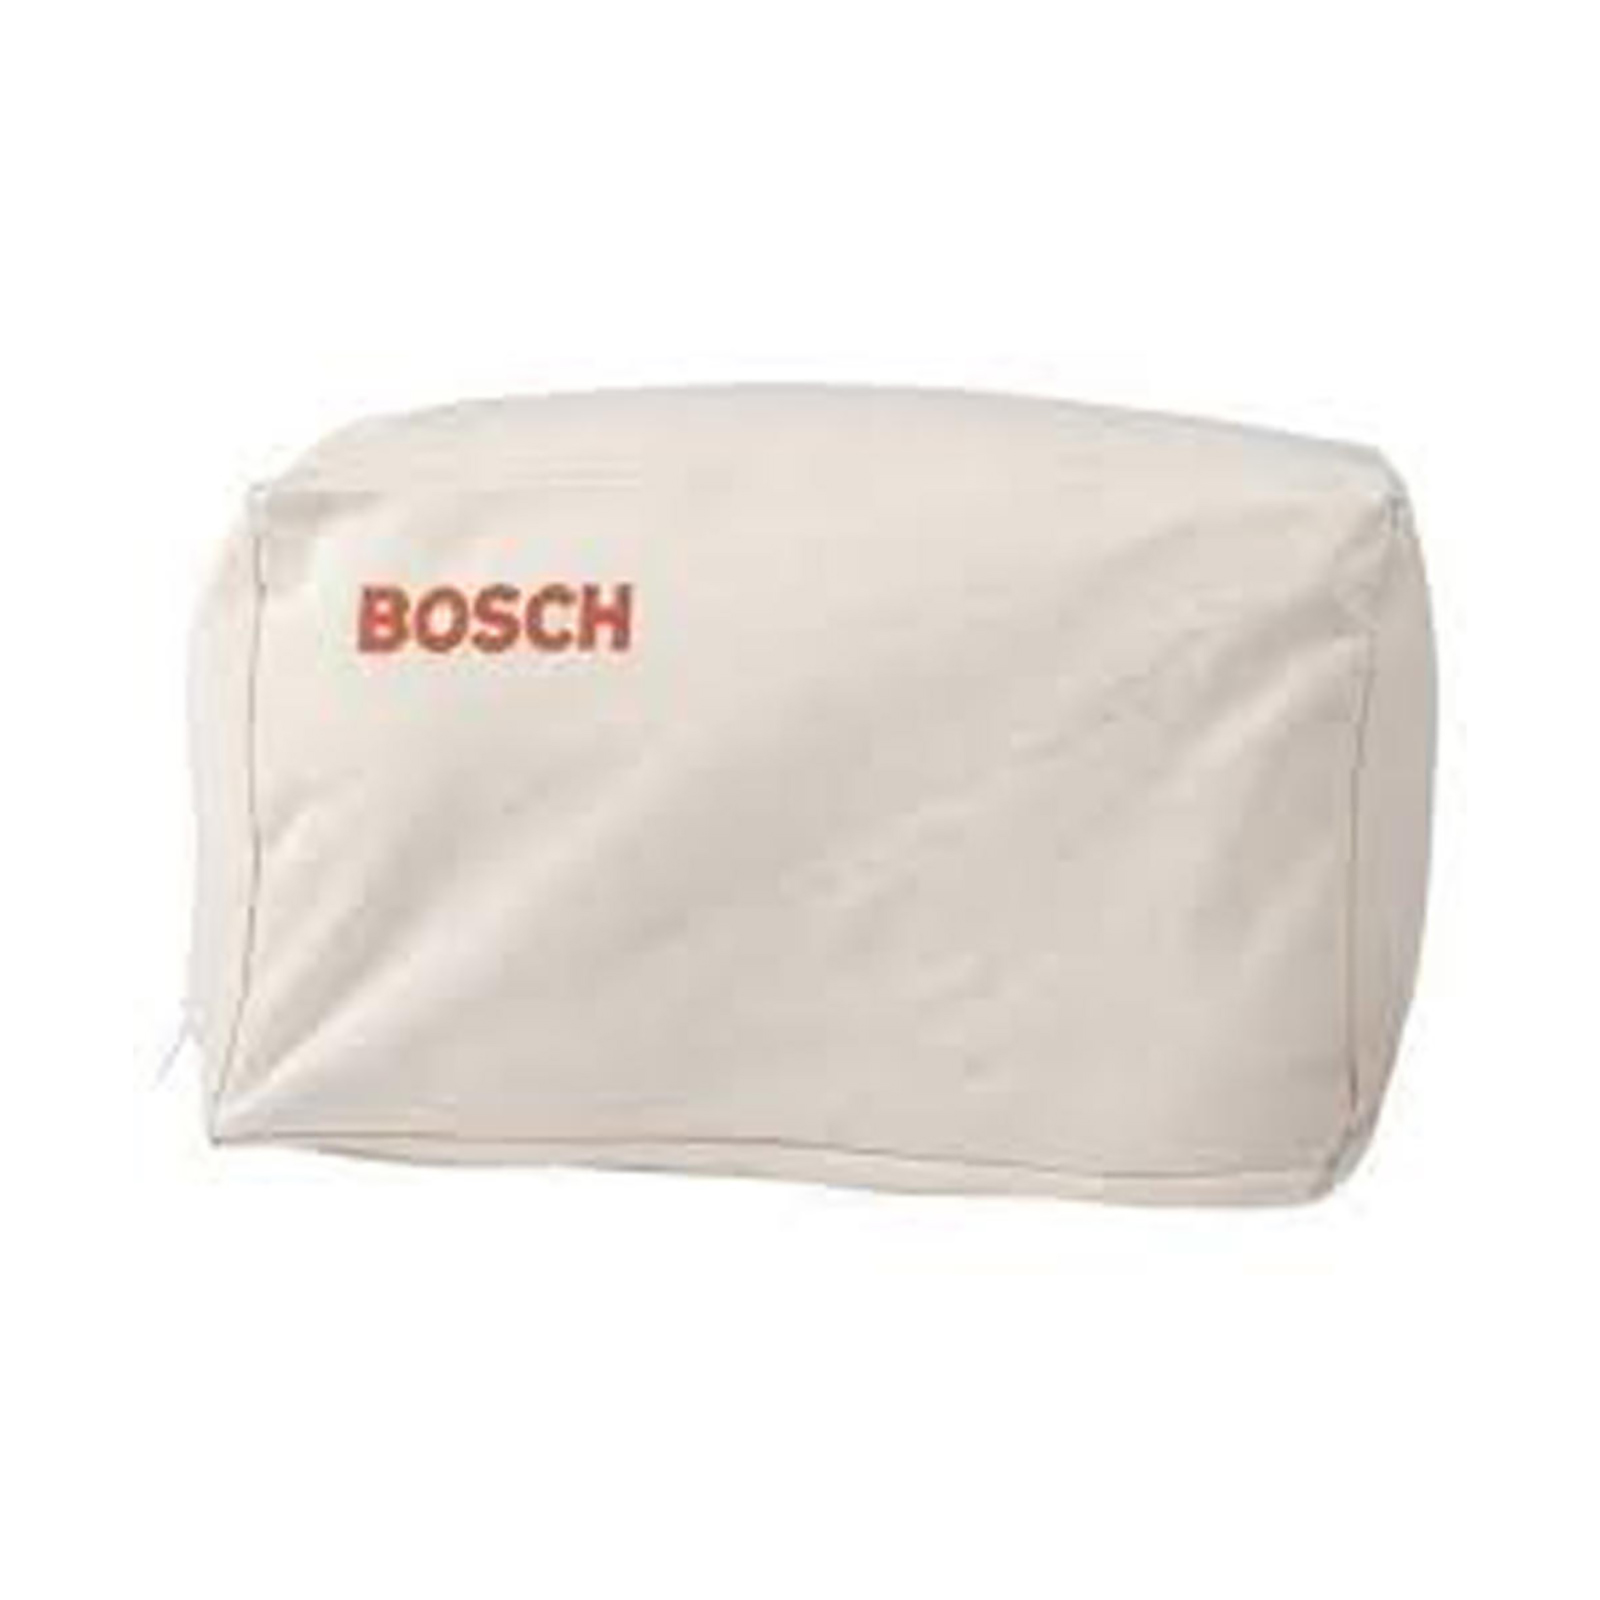 Bosch Planer Replacement Dust Bag